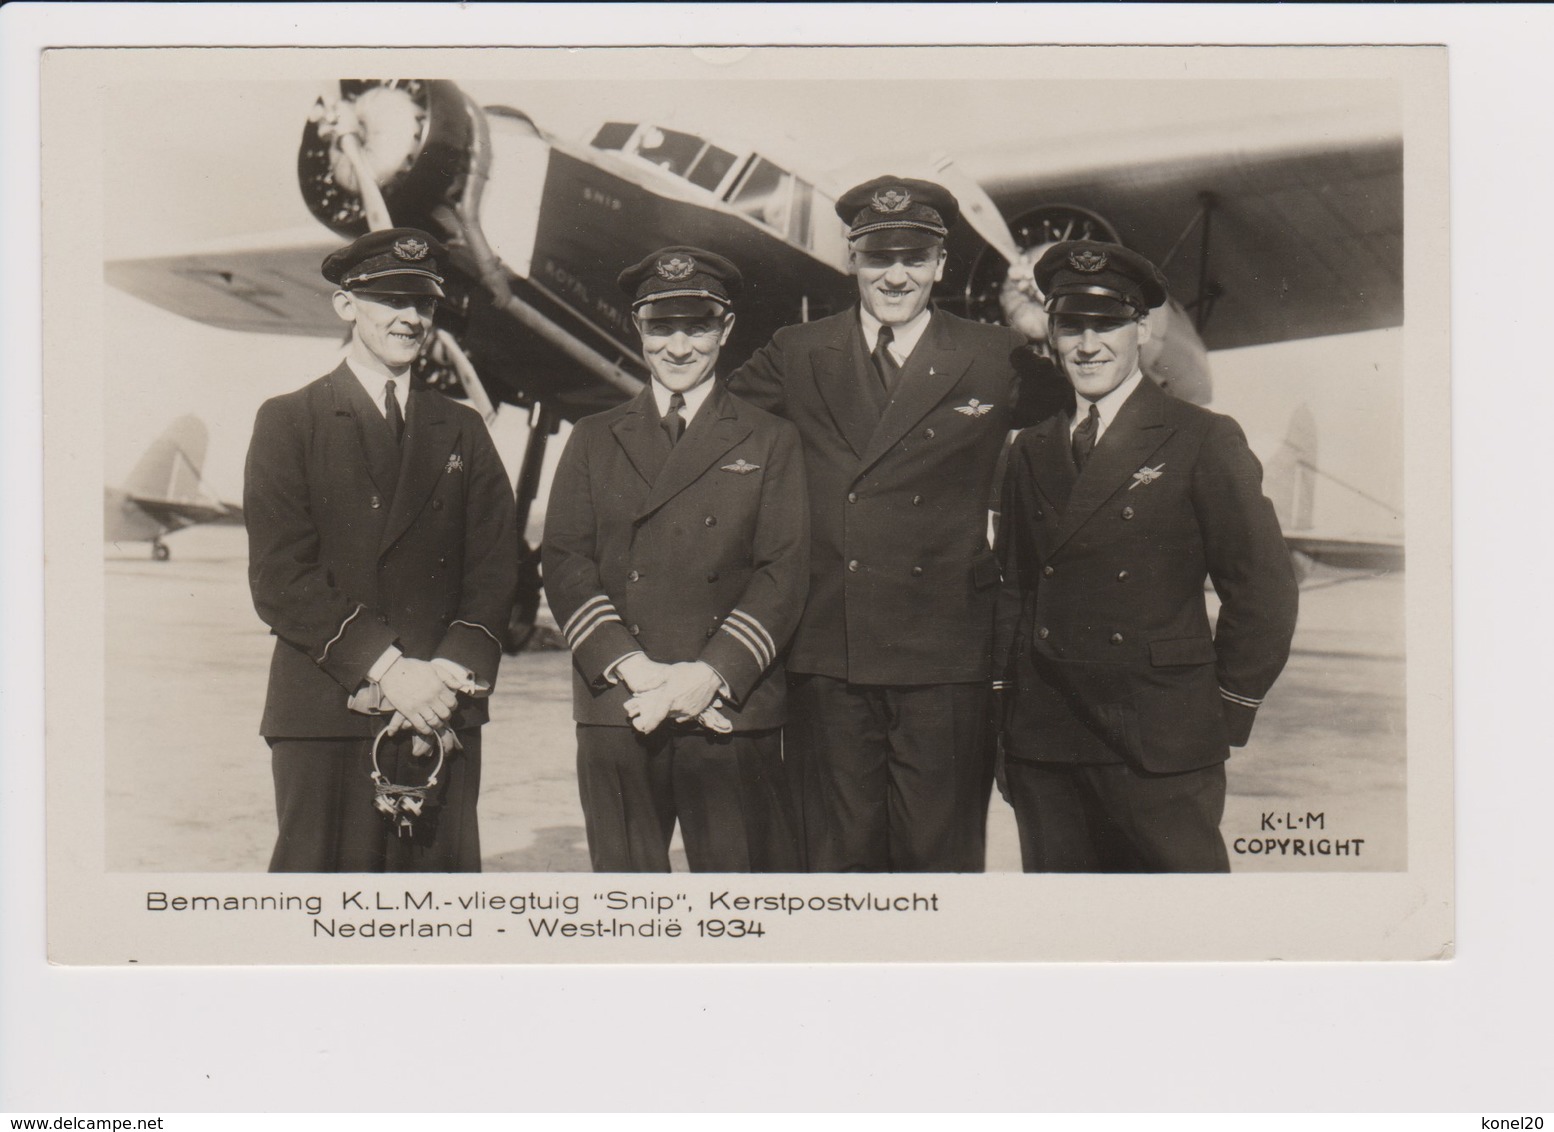 Vintage Rppc KLM K.L.M Royal Dutch Airlines Crew Christmas Flight 1934 Before Fokker F-18 Aircraft - 1919-1938: Between Wars